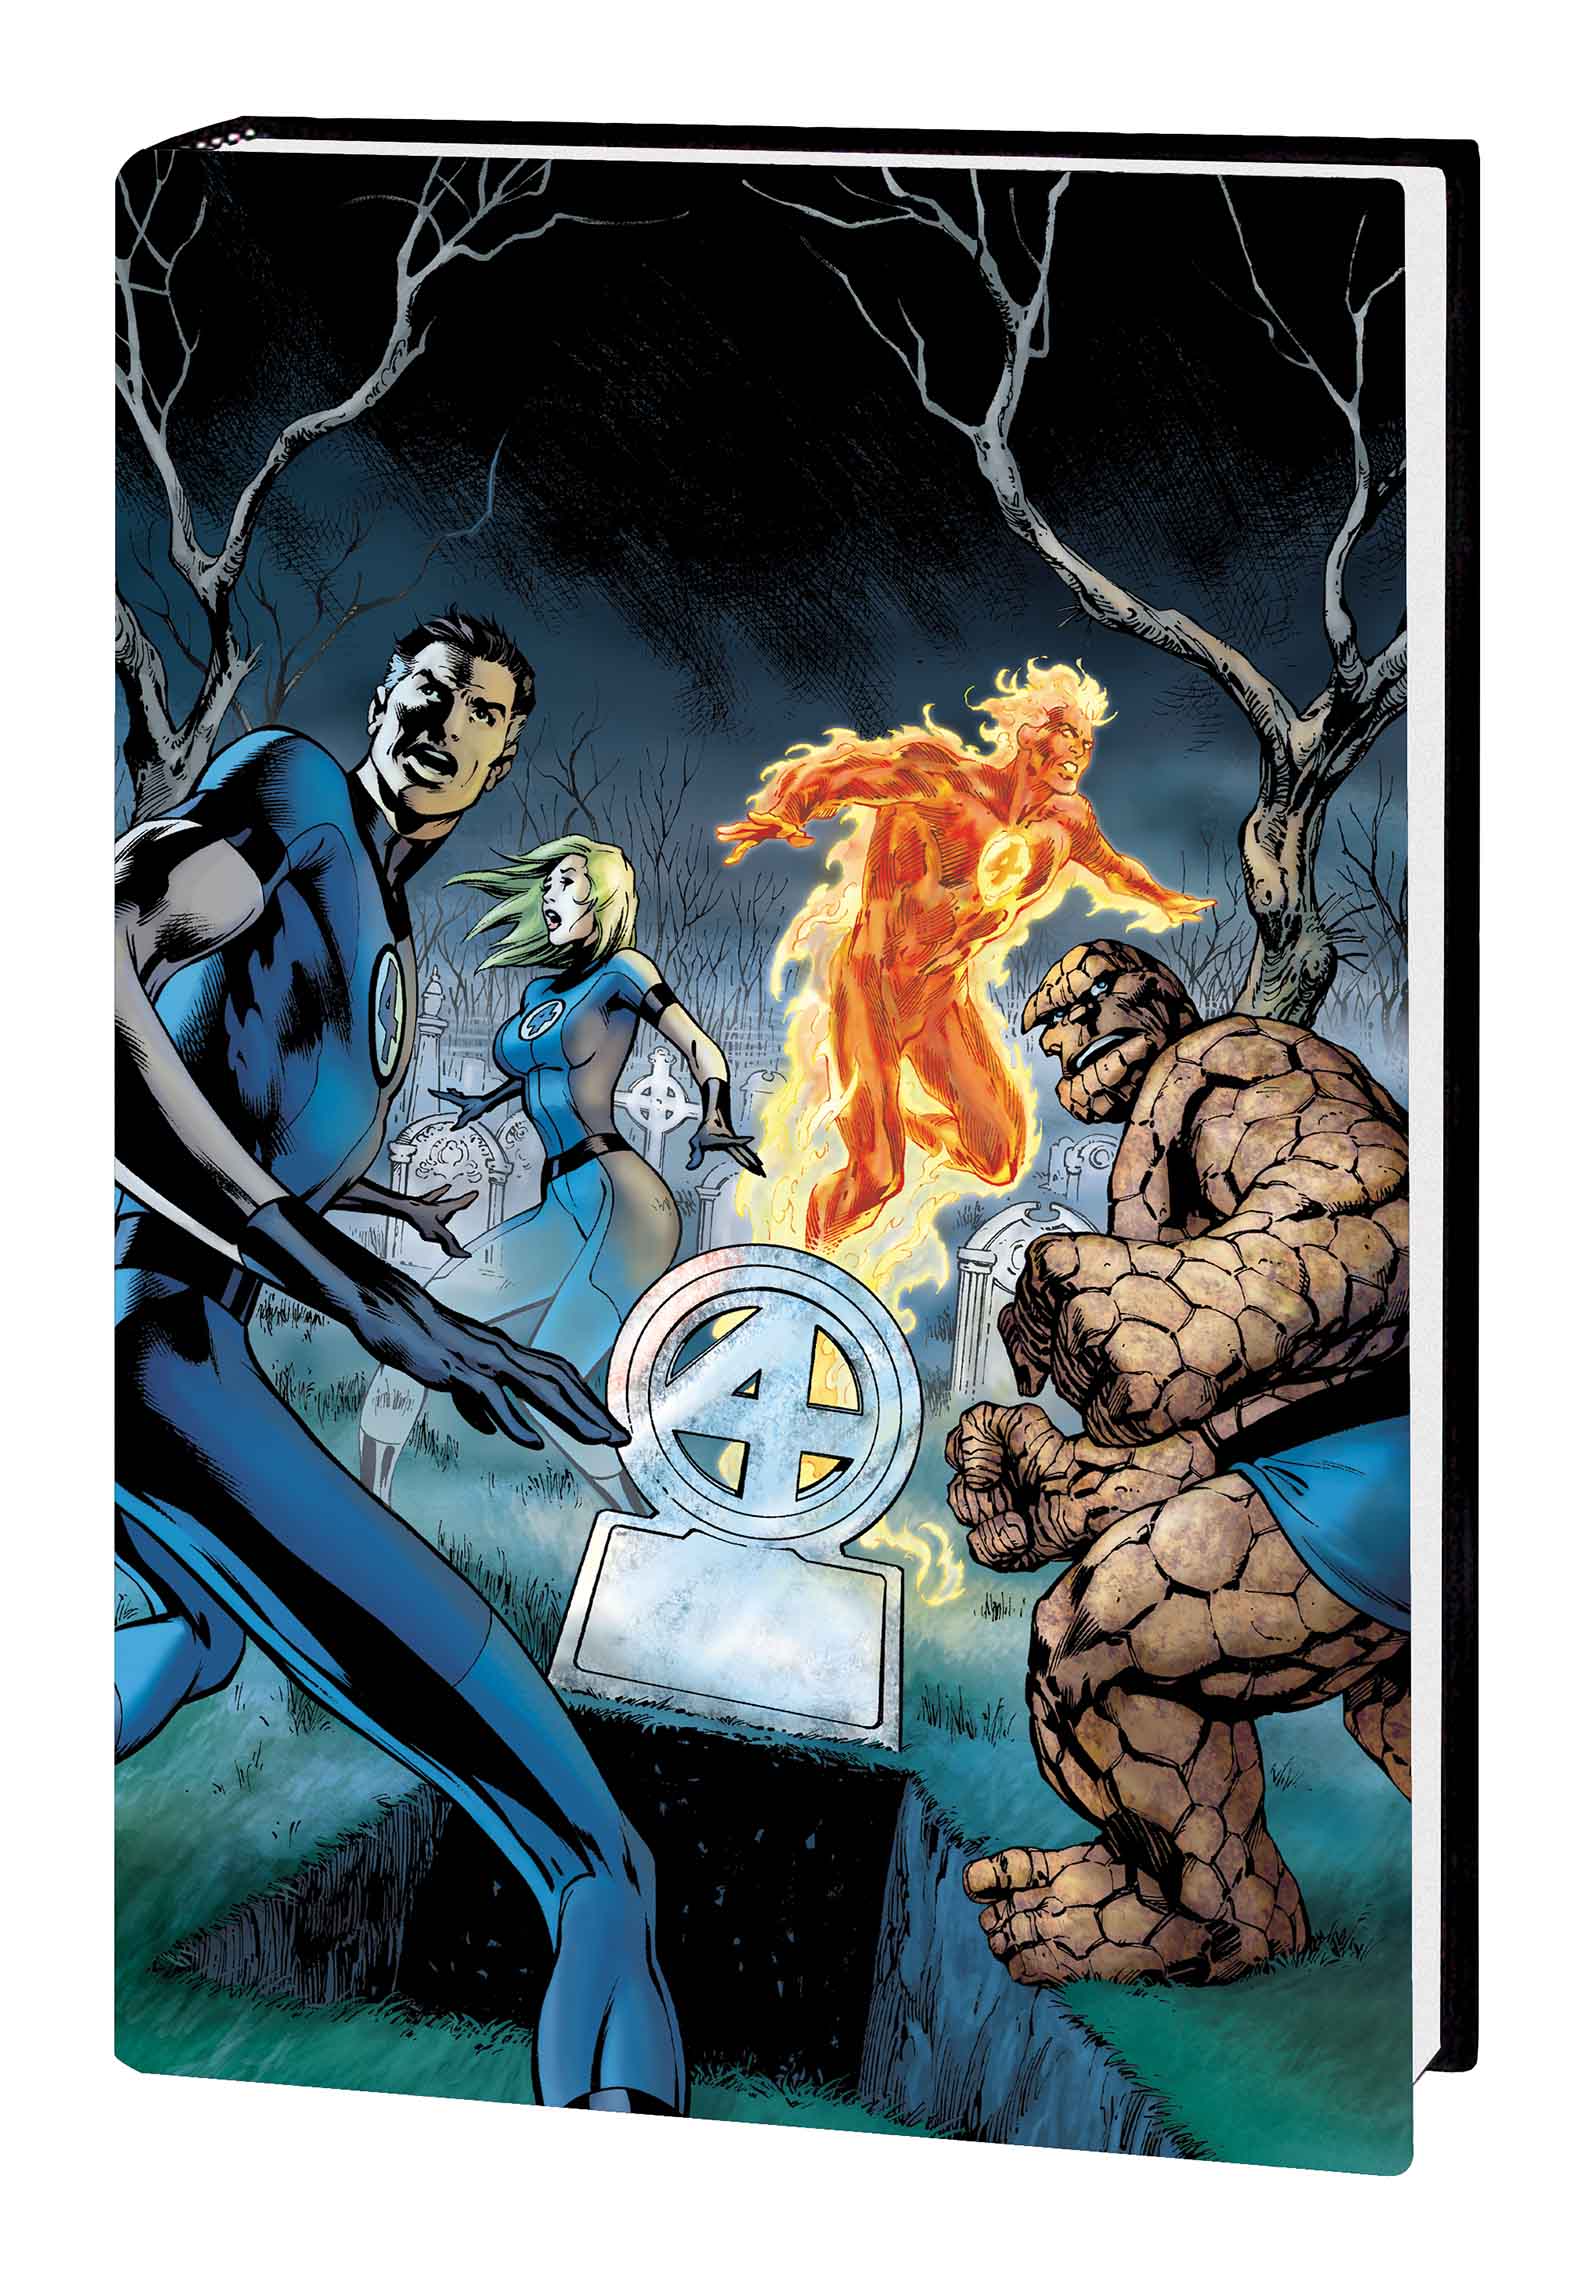 Fantastic Four, Volume 1 by Jonathan Hickman